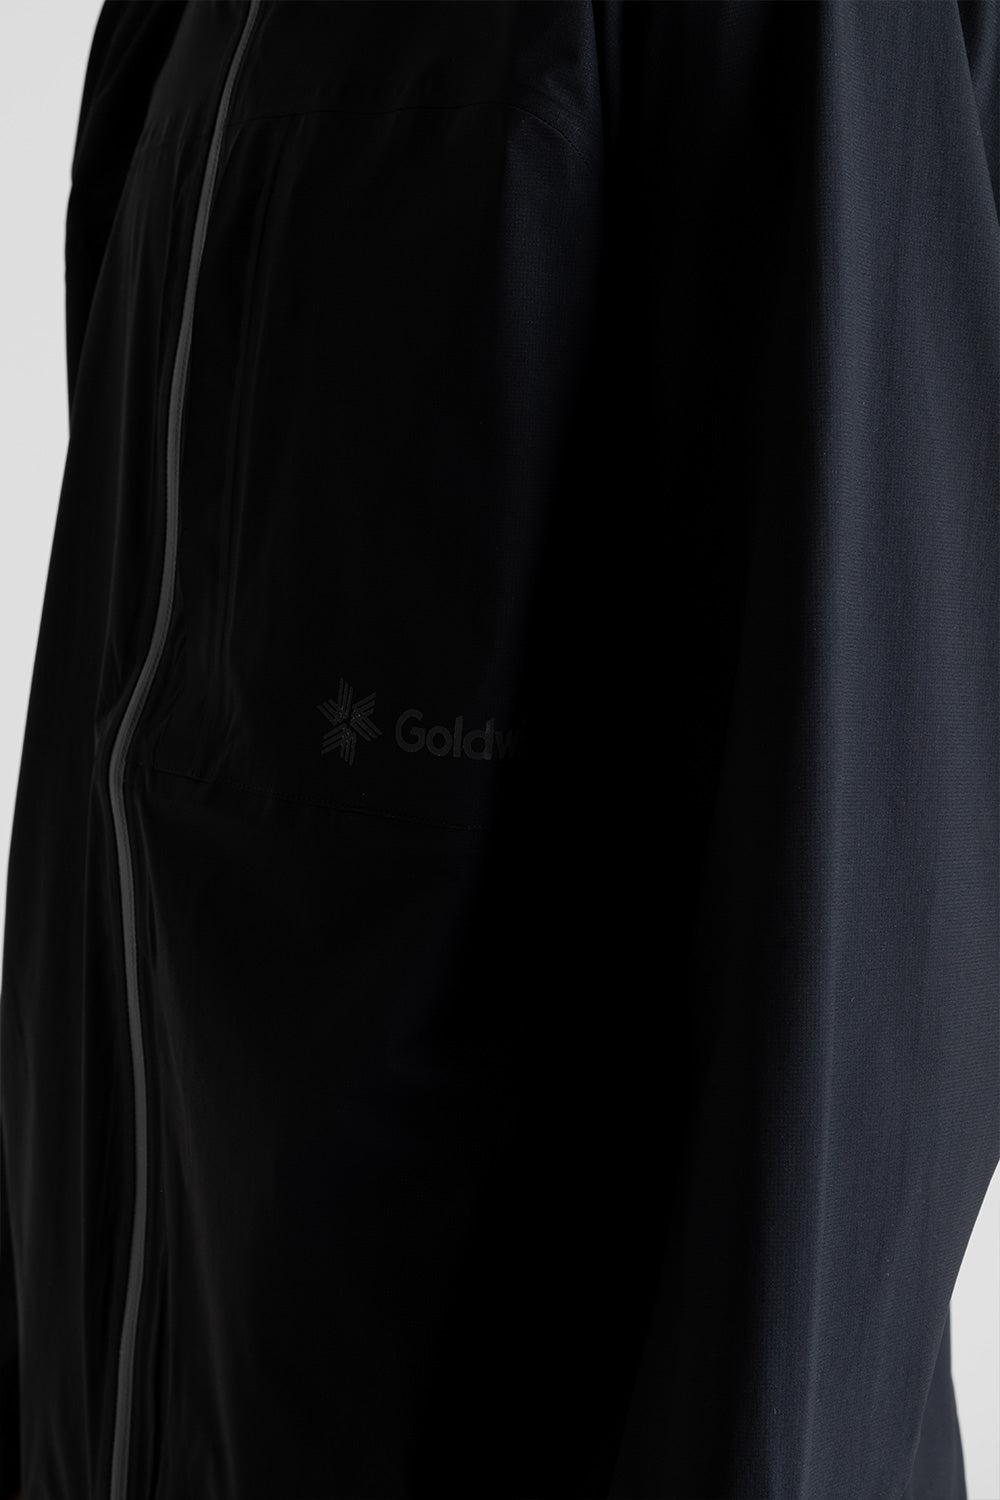 Goldwin-fast-shell-light-jacket-black